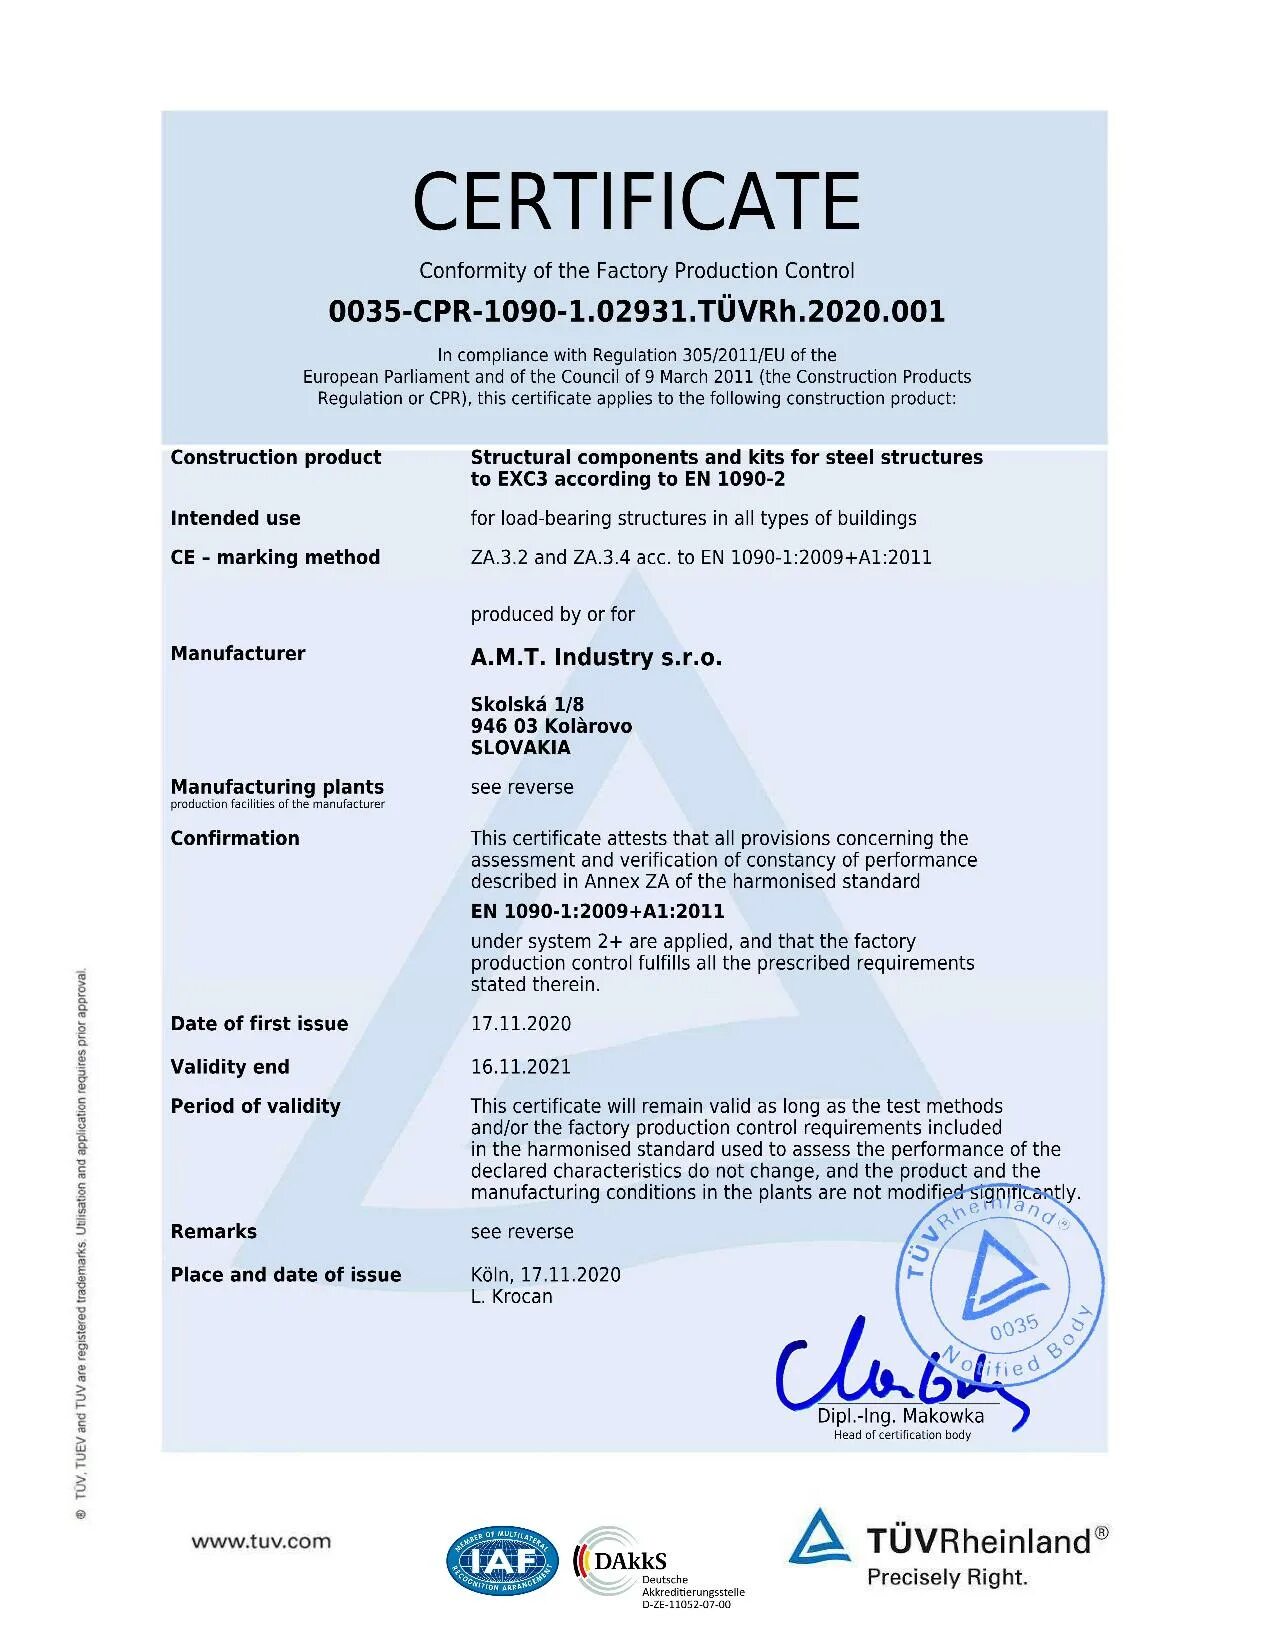 Certificate of conformity. Certificate of conformity Germany. Certificate of conformity of the Factory Production Control. Conformity Certificate китайский.